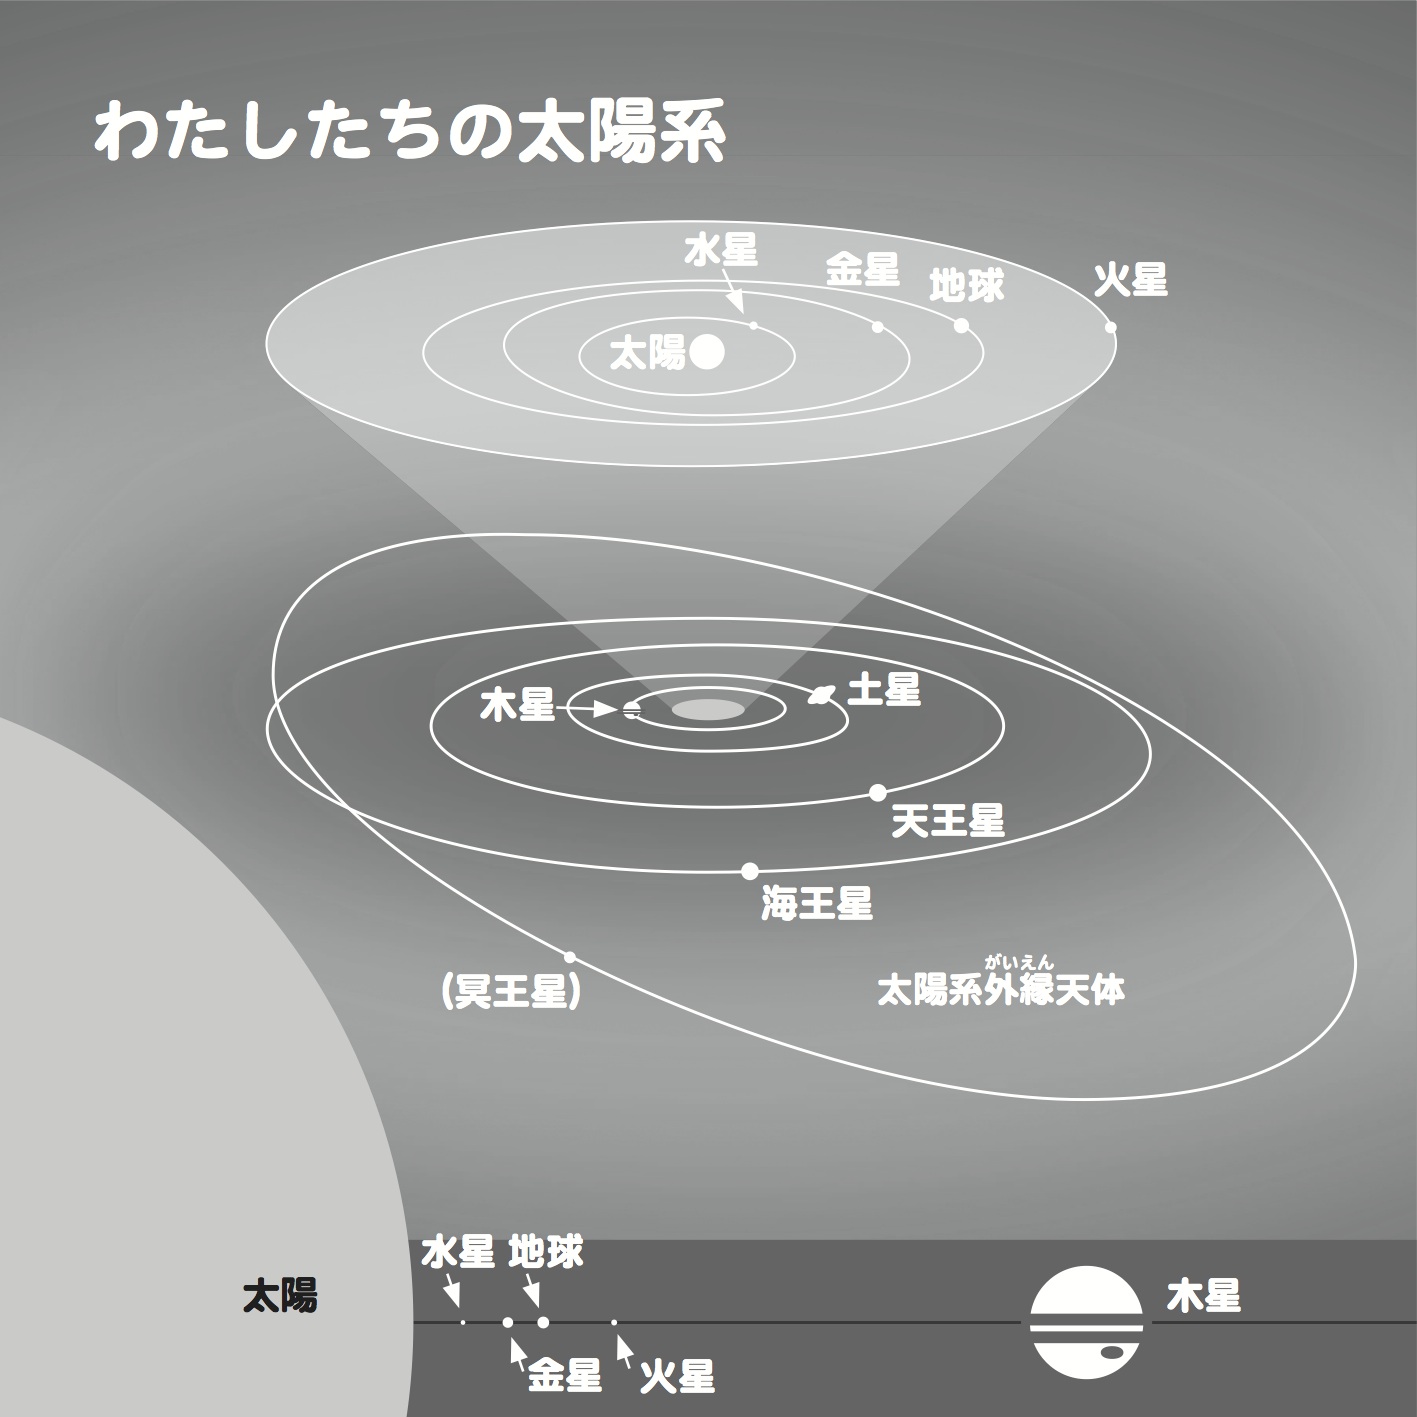 http://www.ncsm.city.nagoya.jp/study/astro/P5_solar_system.jpg